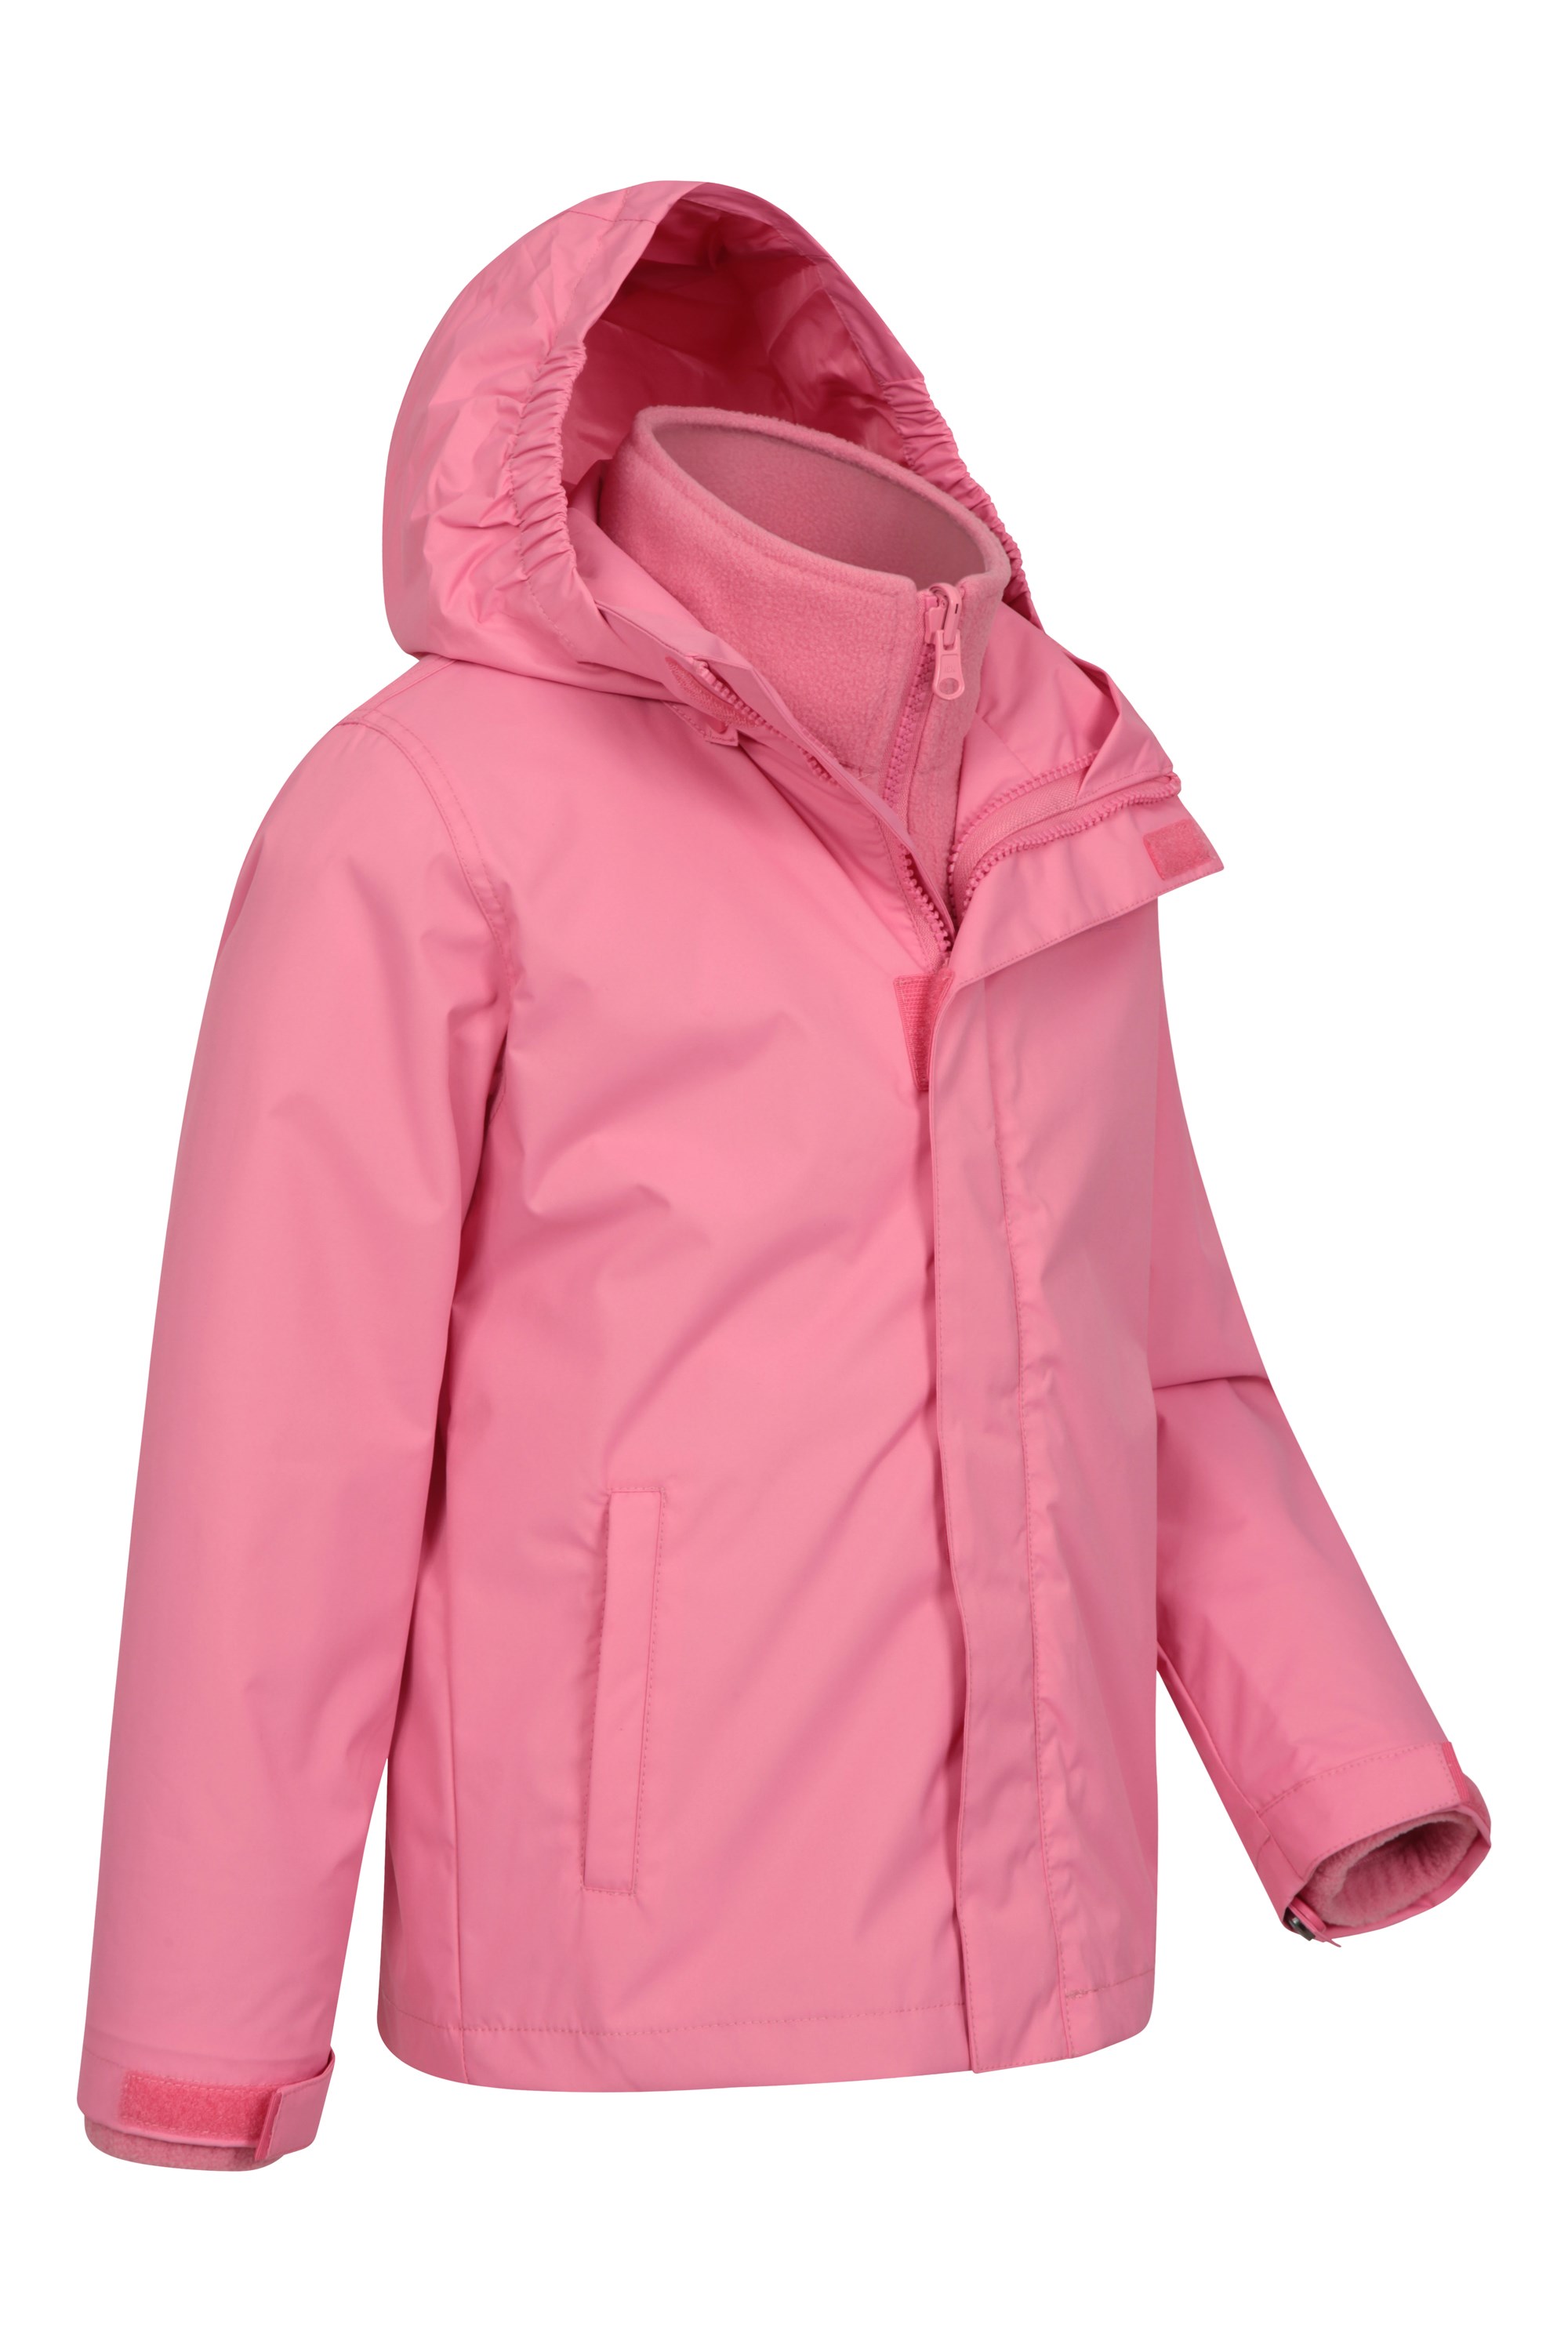 Detachable Inner Jacket Packaway Hood Kids Coat Hiking for Winter Walking Mountain Warehouse Fell Kids 3 in 1 Jacket Water Resistant Triclimate Rain Jacket